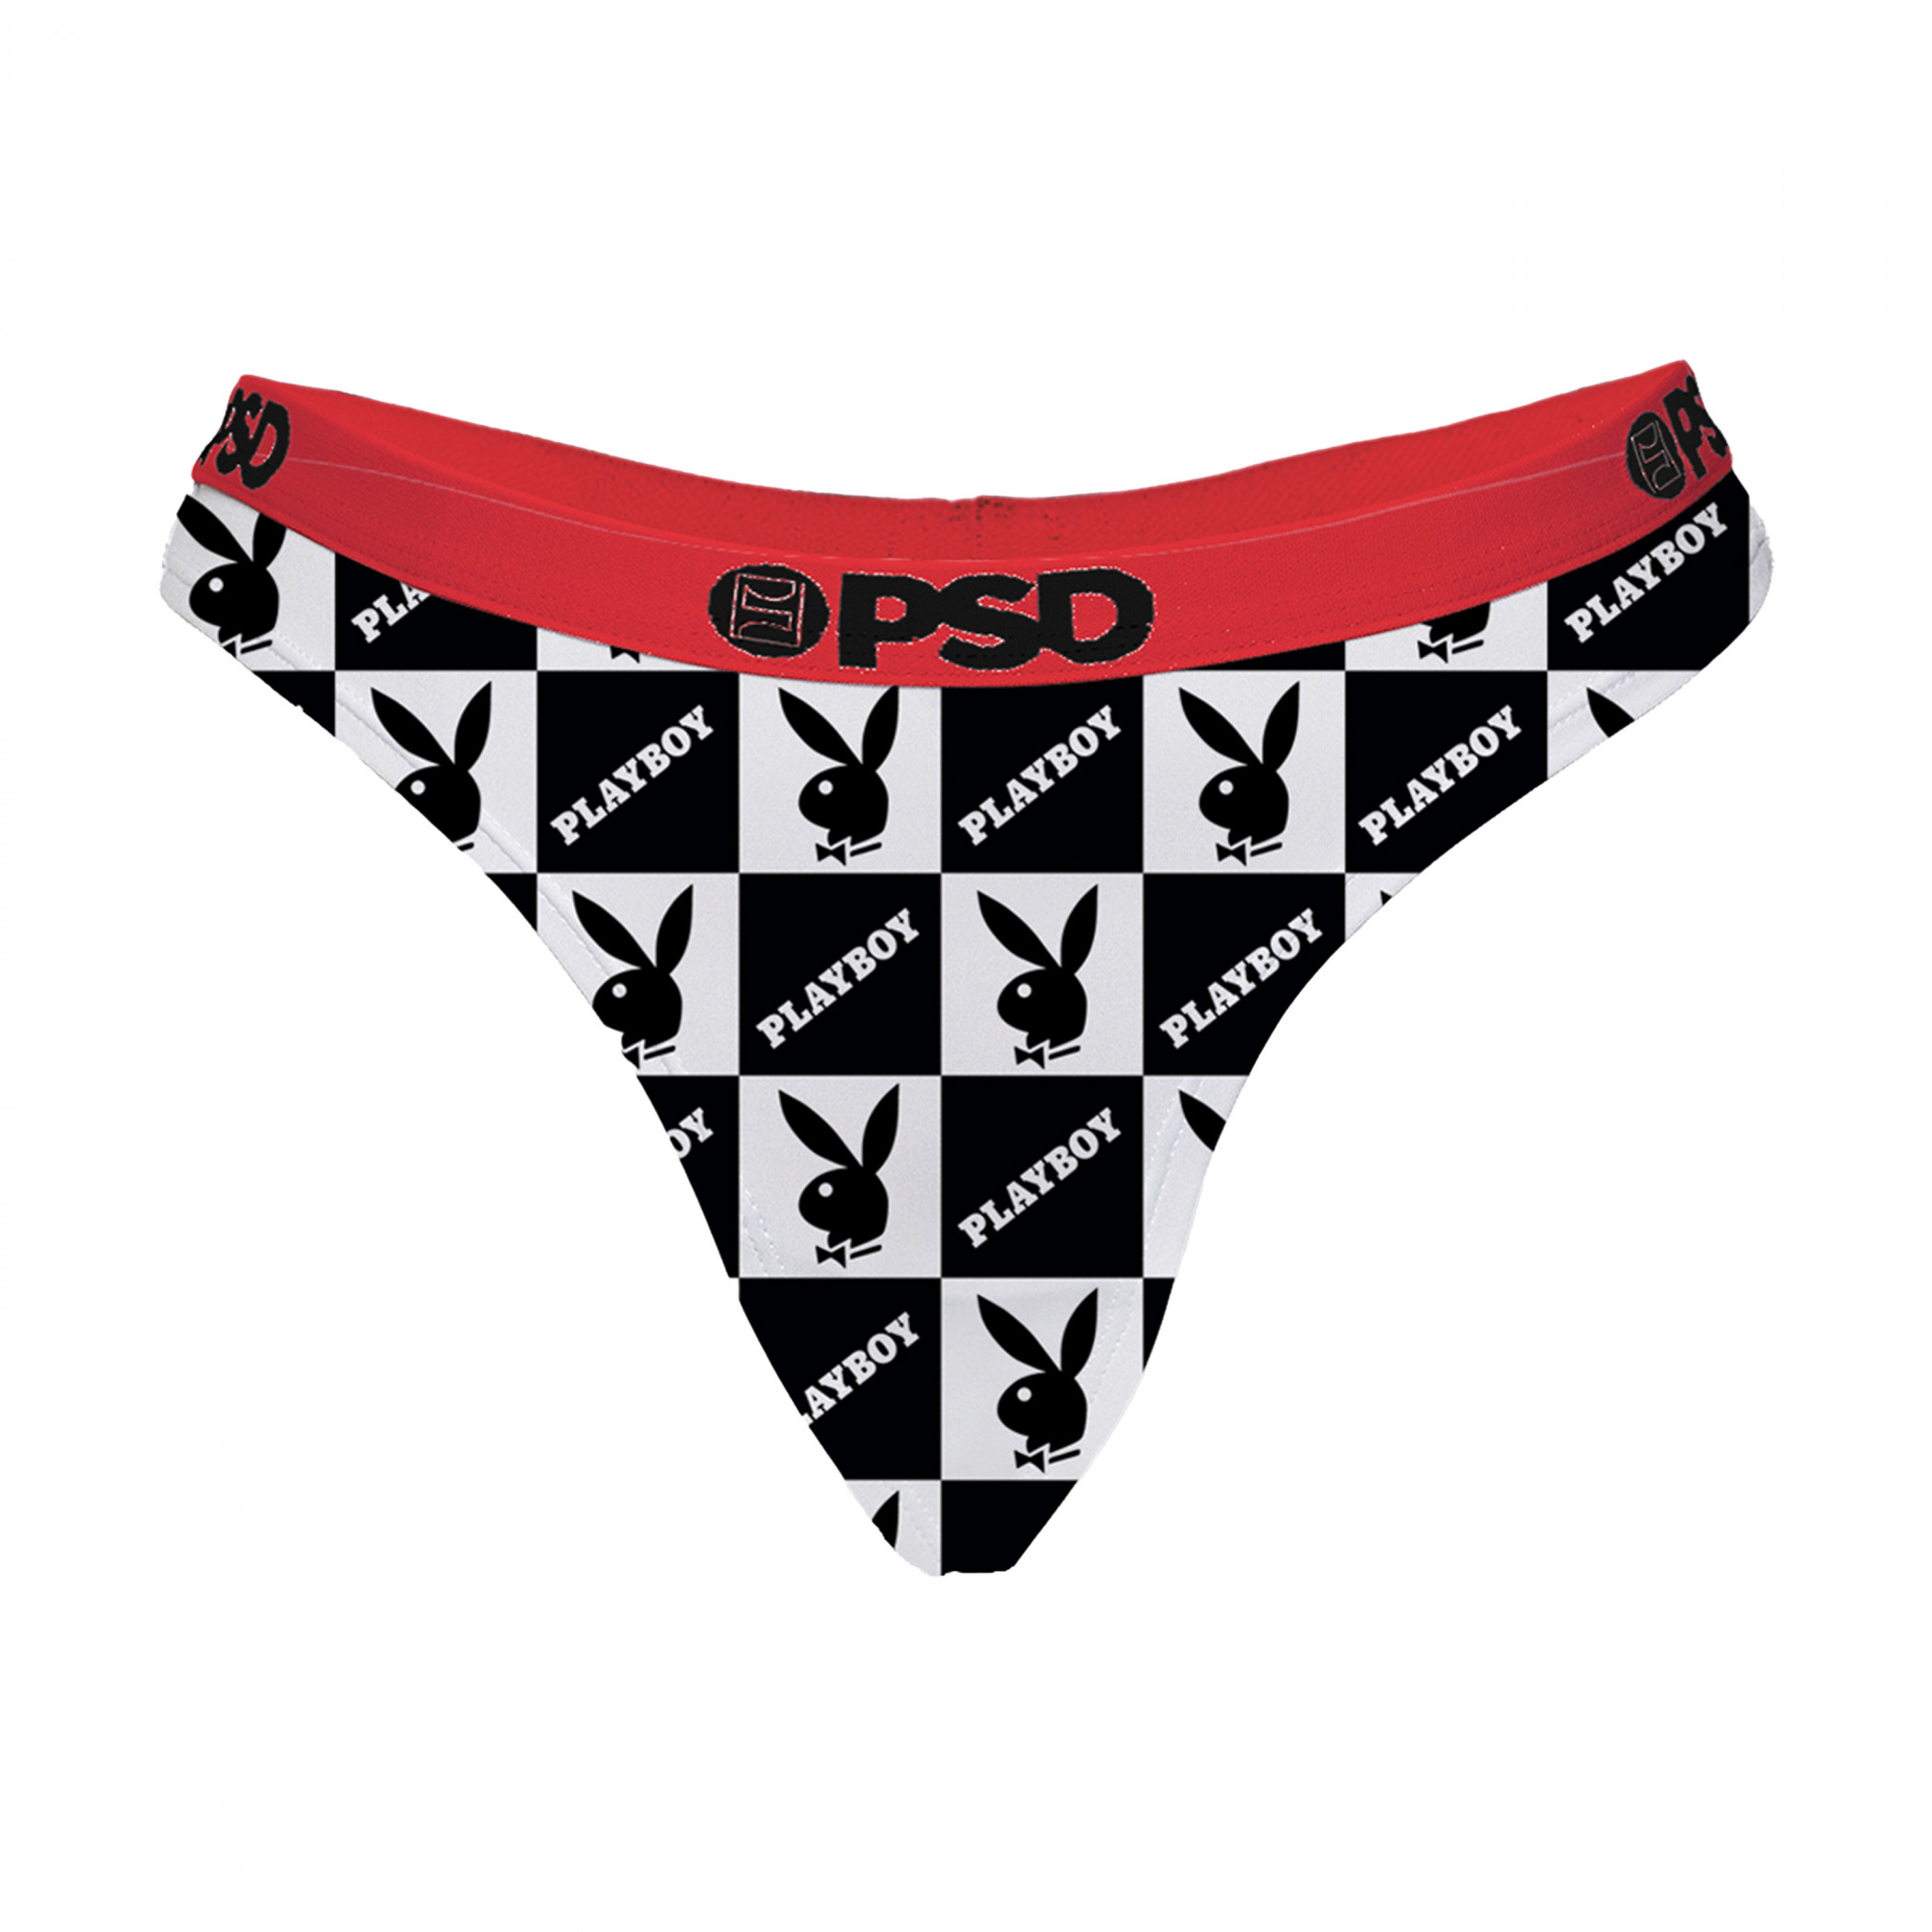 Playboy Bunny Mascot Microfiber Blend Women's PSD Boy Shorts Underwear